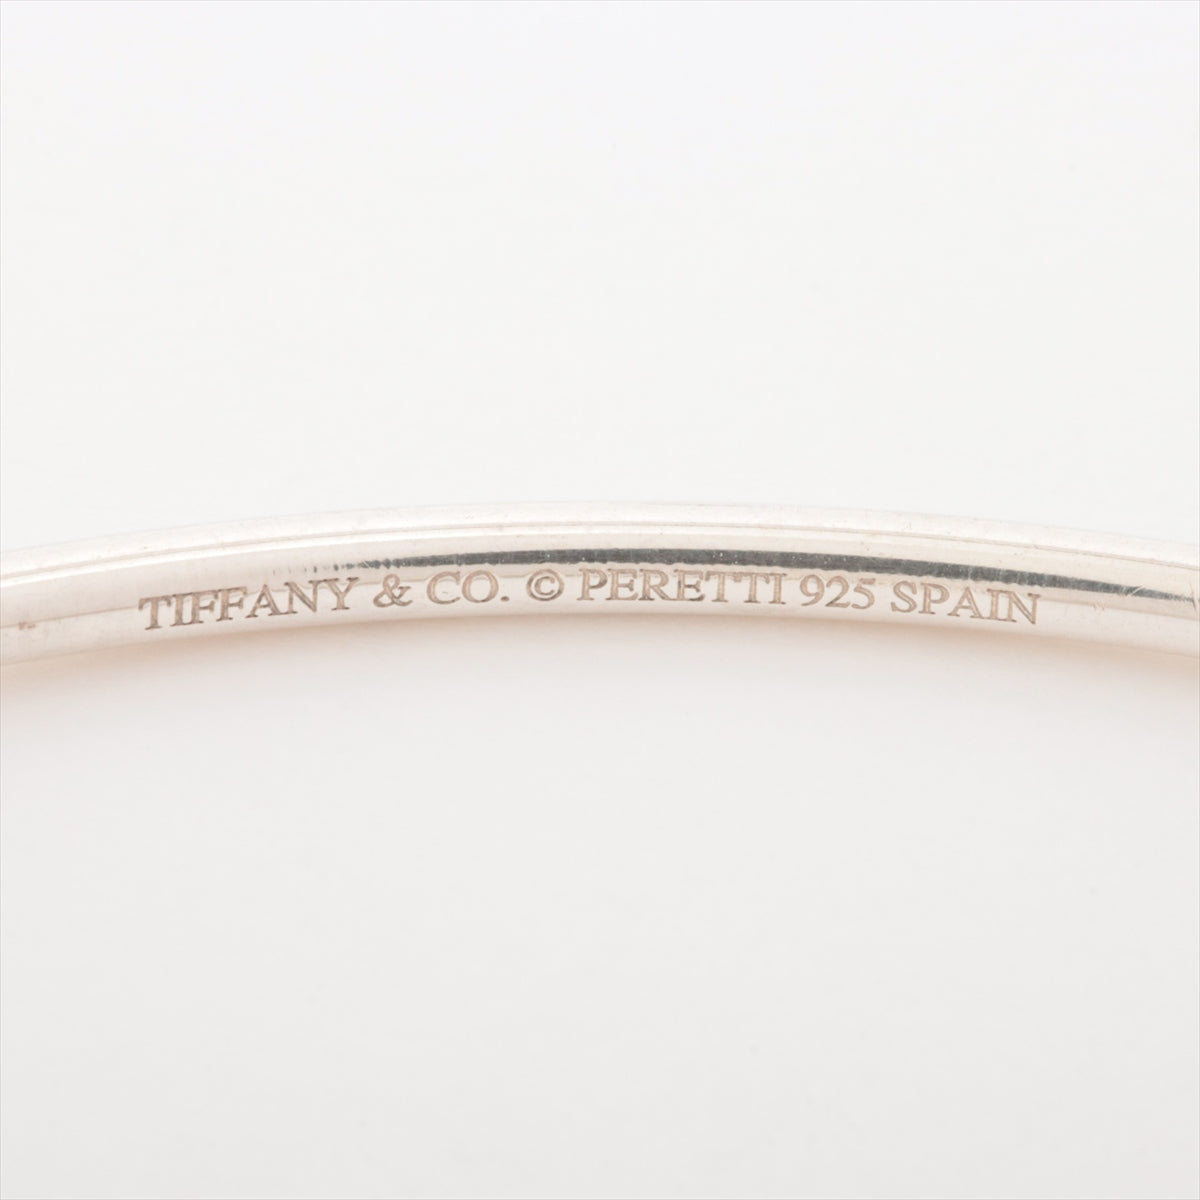 Tiffany Openheart Bangle 925 7.3g Silver